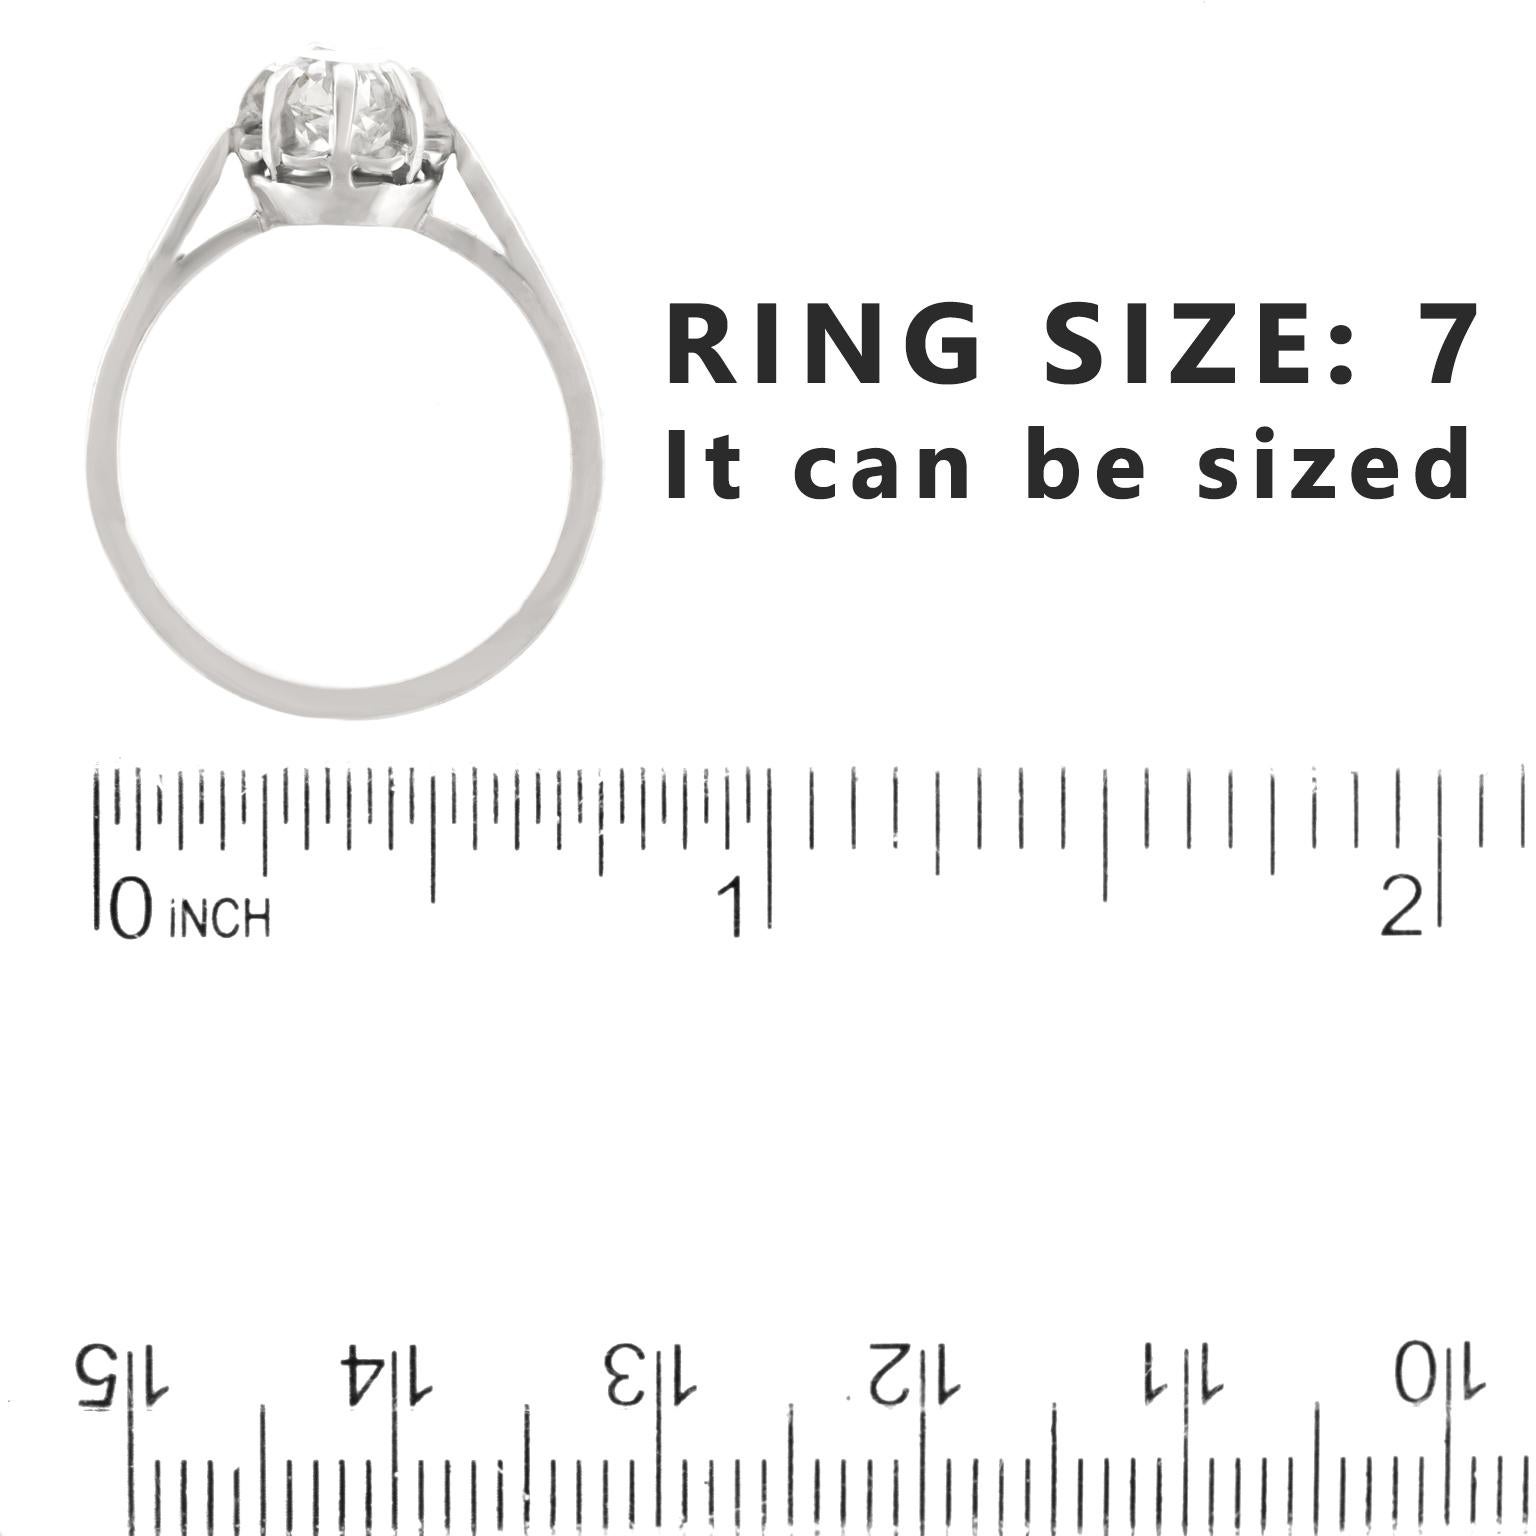 Art Deco Diamond Engagement Ring 1